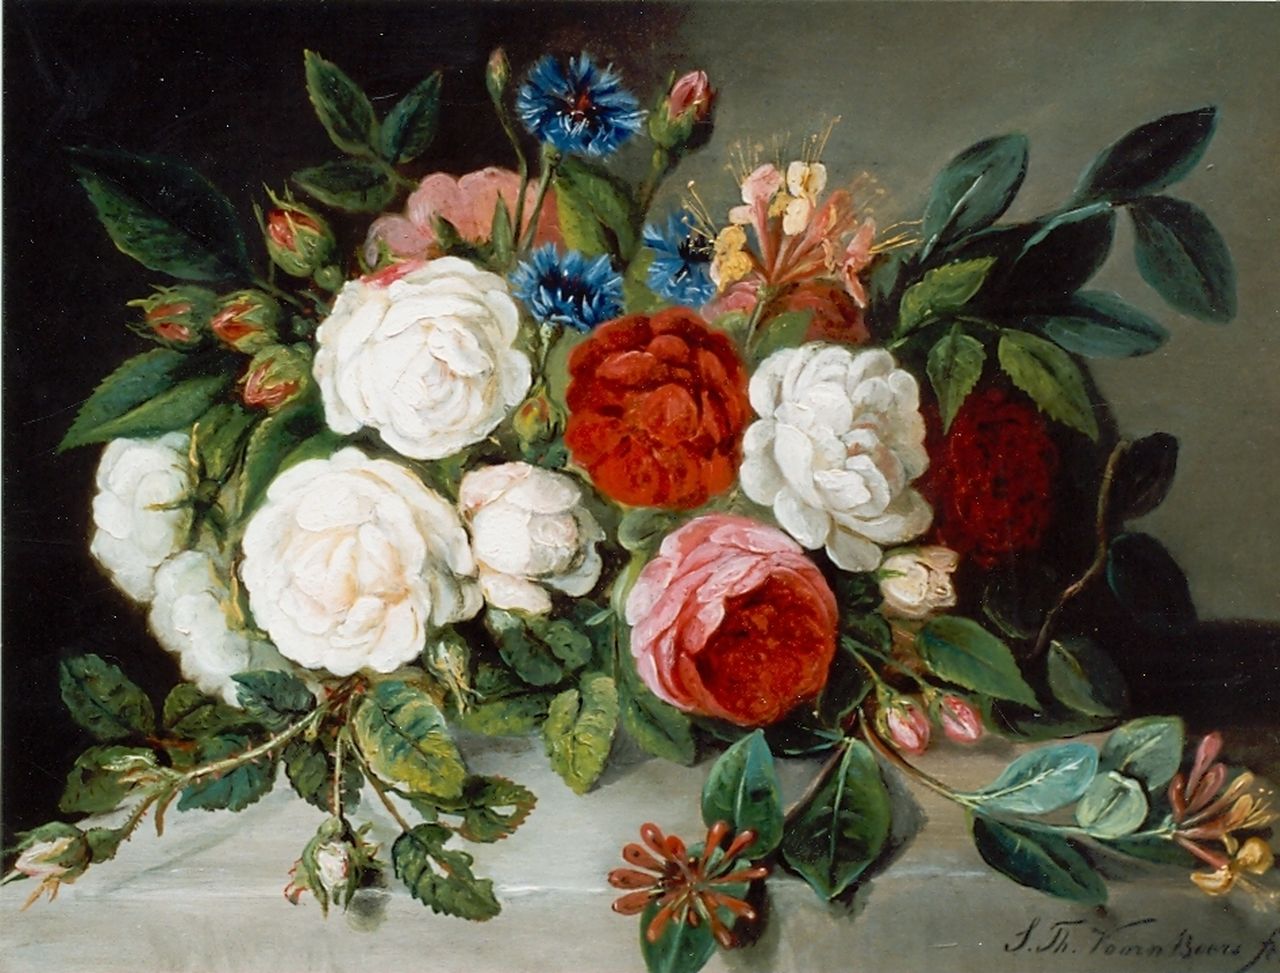 Voorn Boers S.T.  | Sebastiaan Theodorus Voorn Boers, Roses and cornflowers, oil on canvas 36.0 x 49.5 cm, signed l.r.